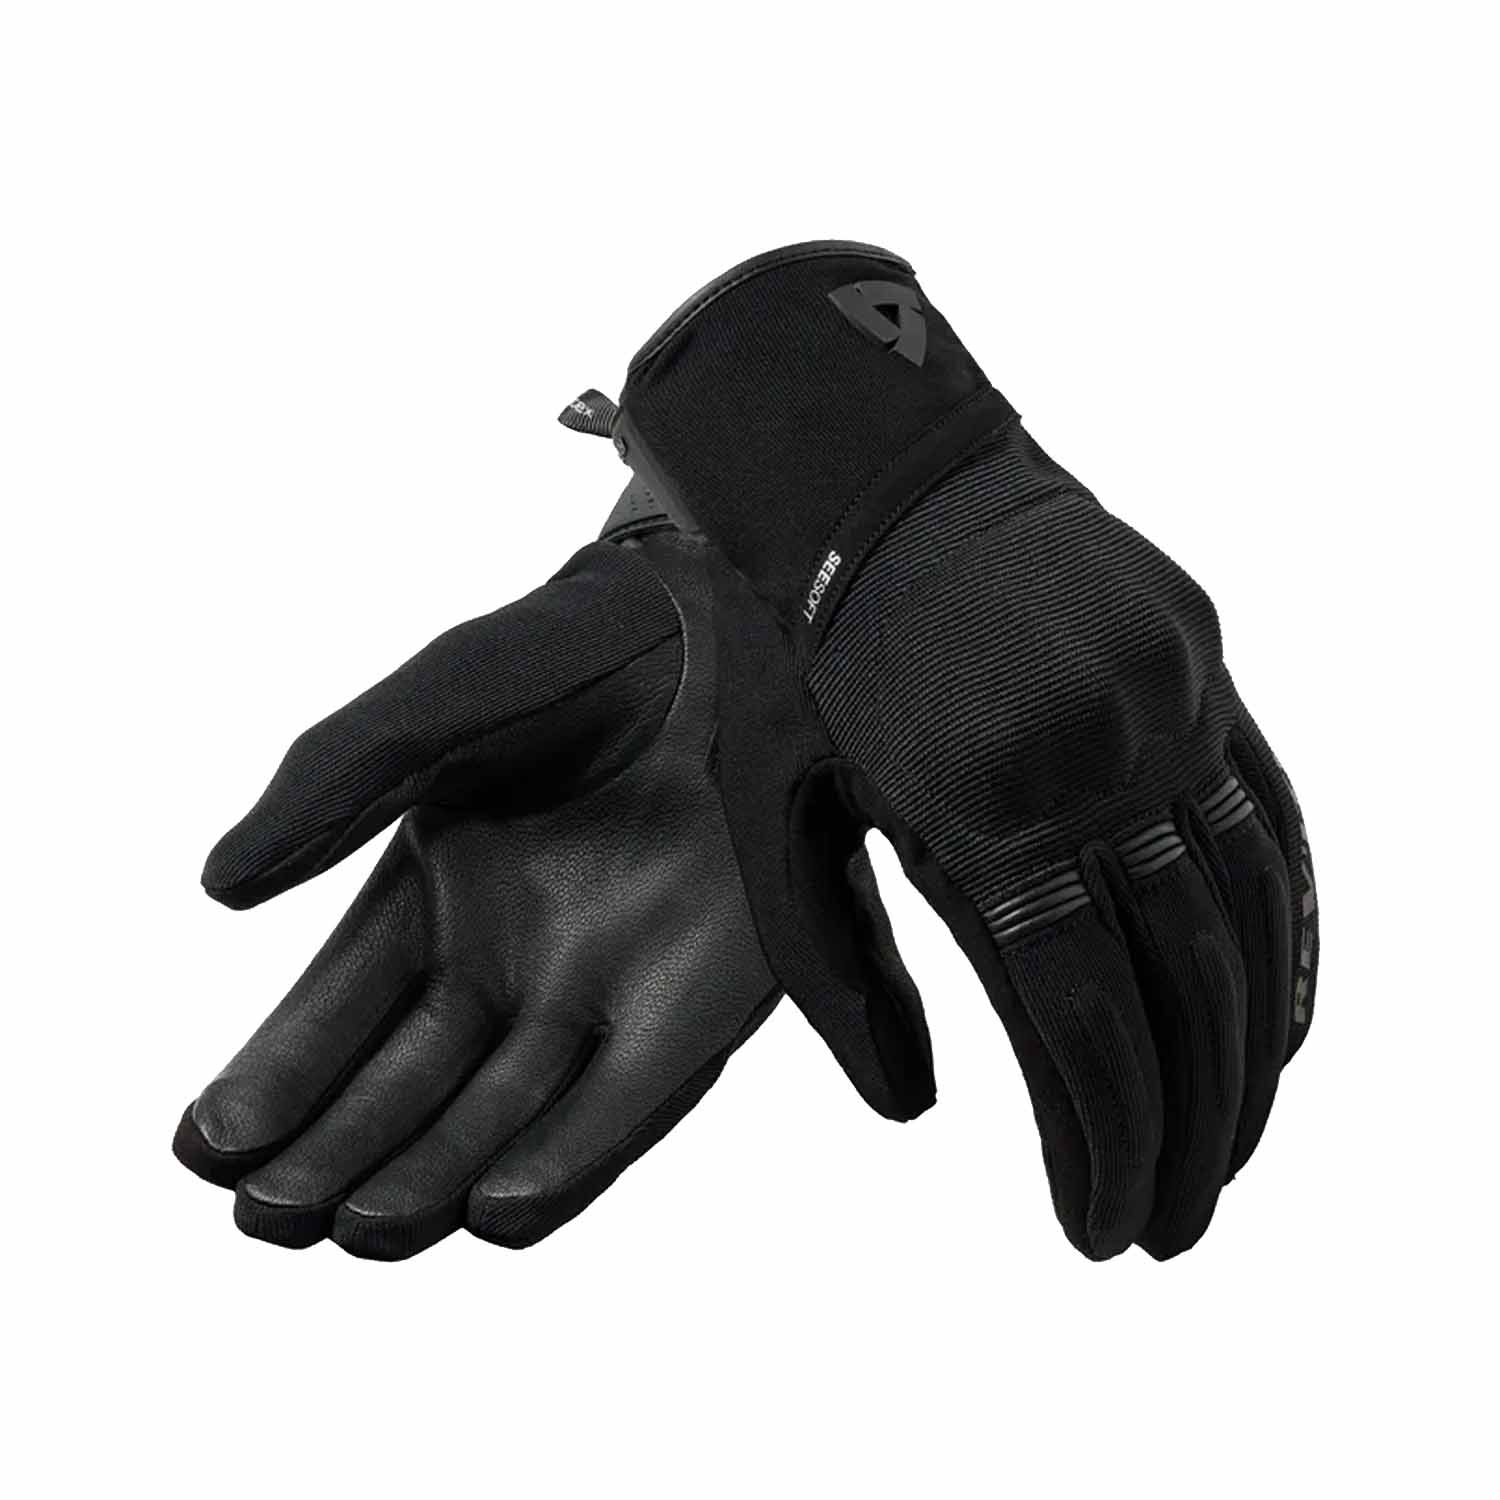 Image of REV'IT! Mosca 2 H2O Gloves Ladies Black Size XXS ID 8700001378048